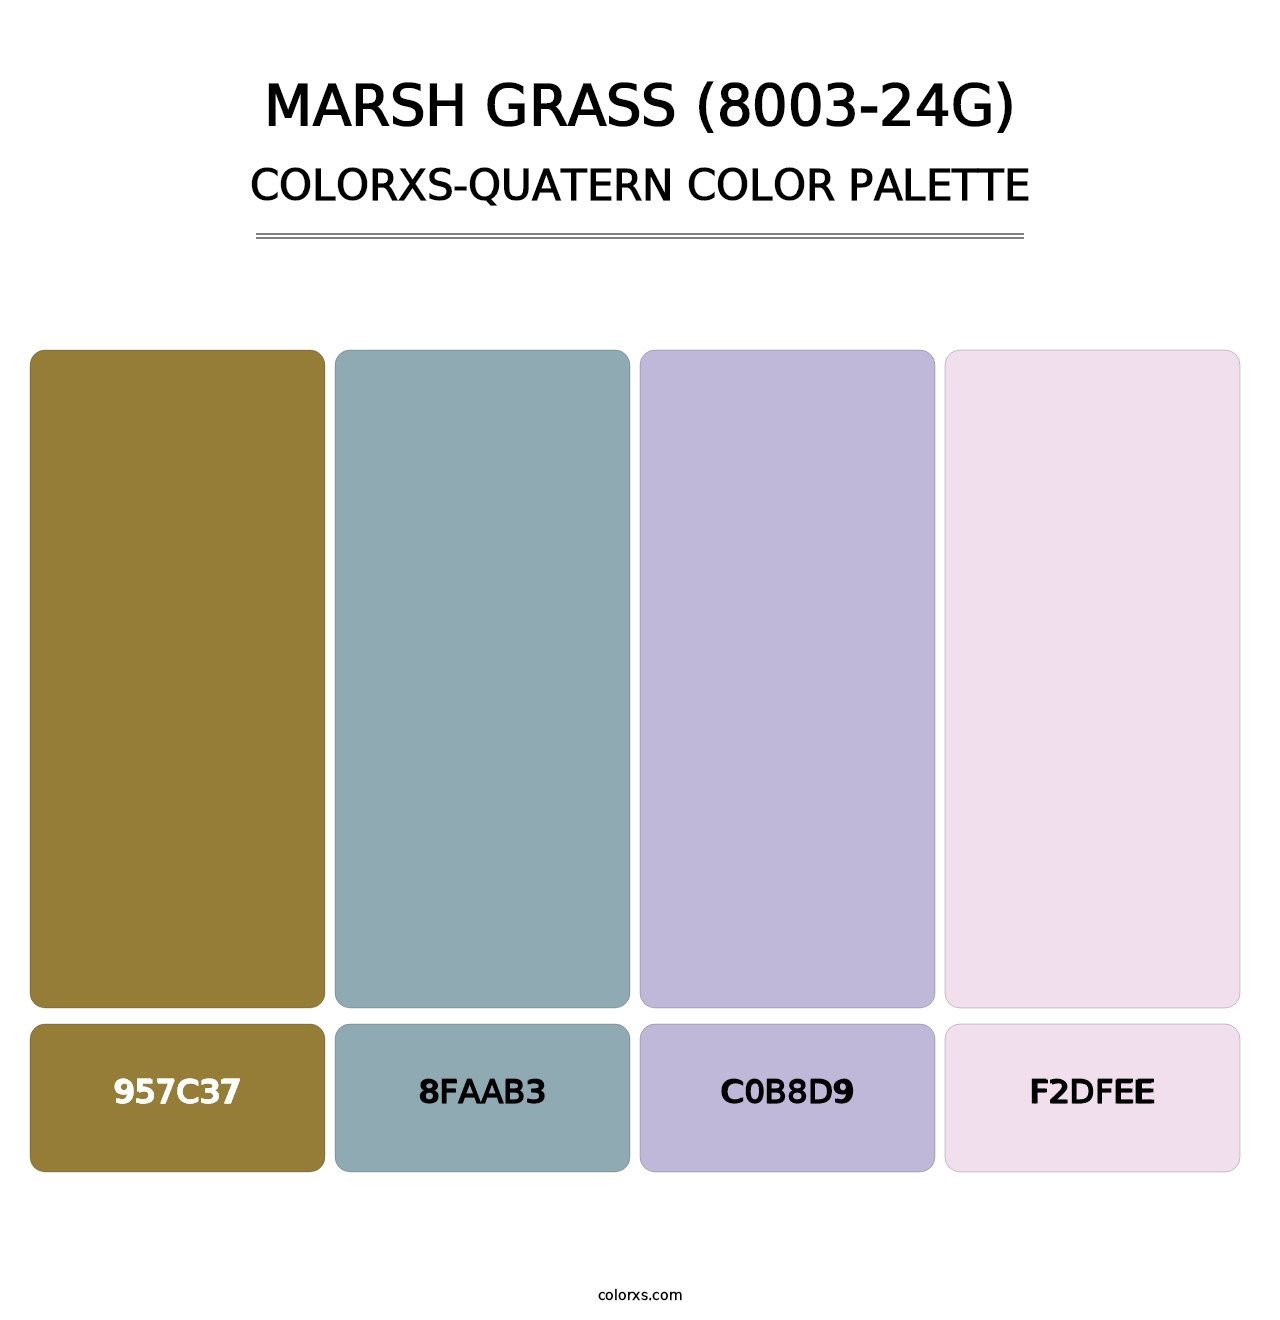 Marsh Grass (8003-24G) - Colorxs Quatern Palette